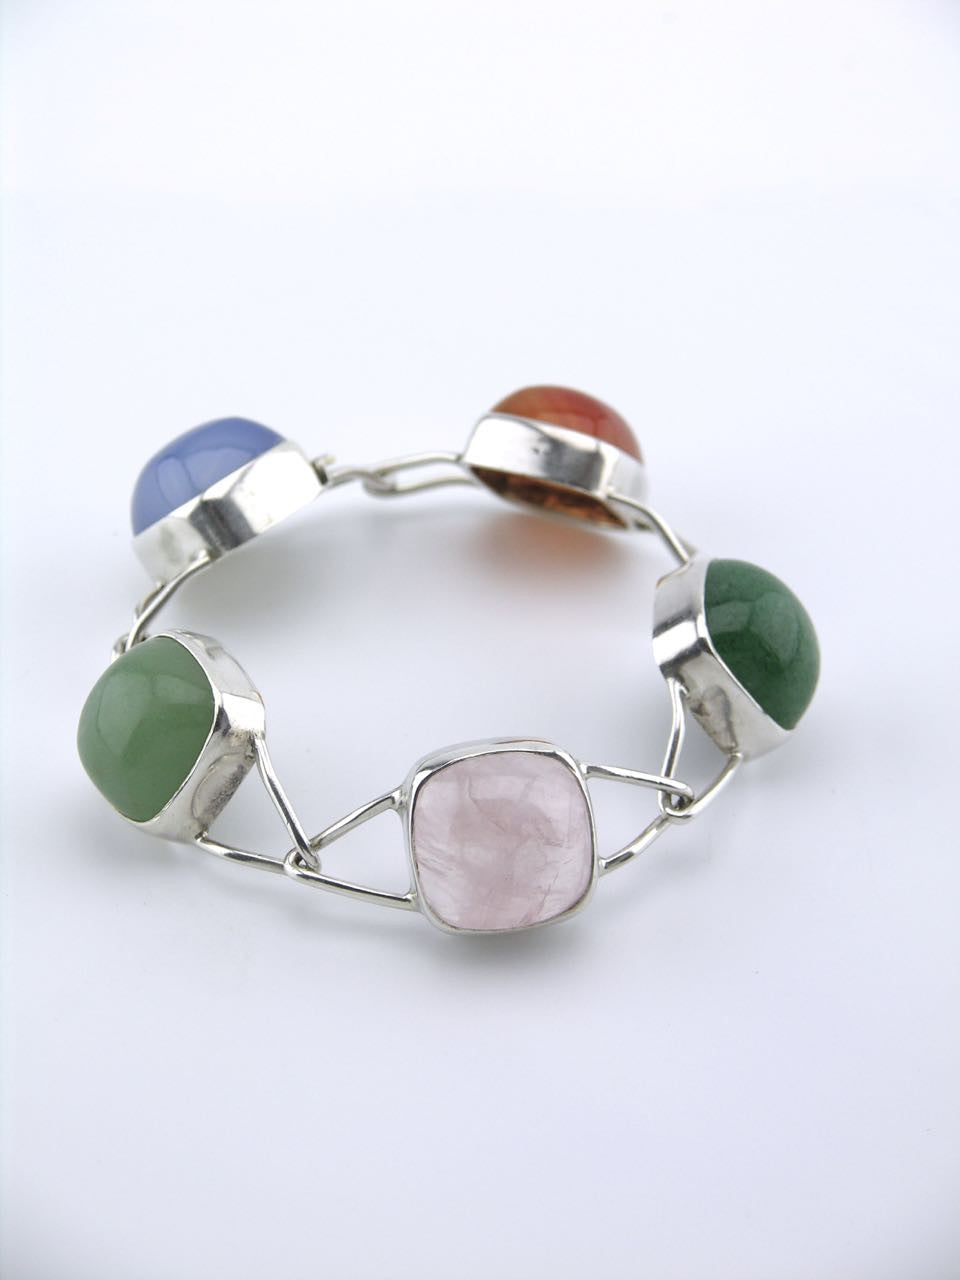 Swedish modernist silver and cabachon pebble bracelet